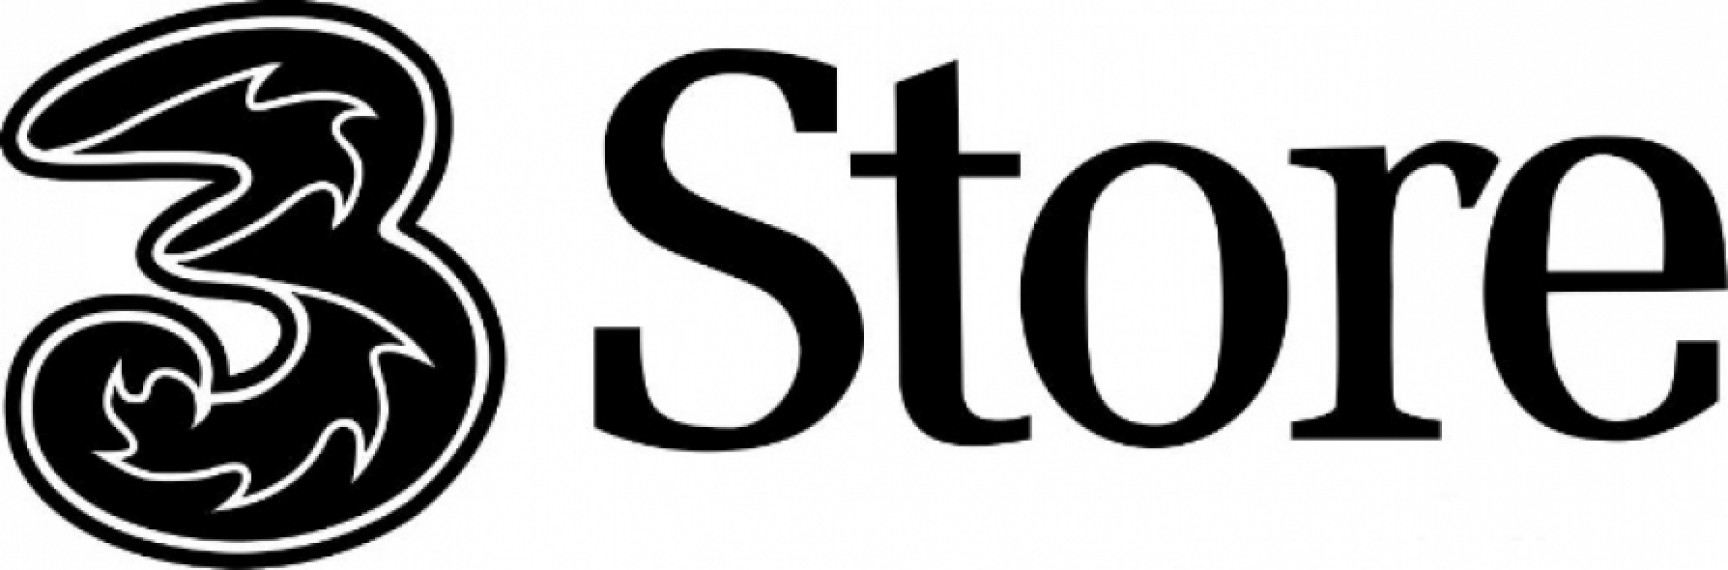 3 store Logo photo - 1